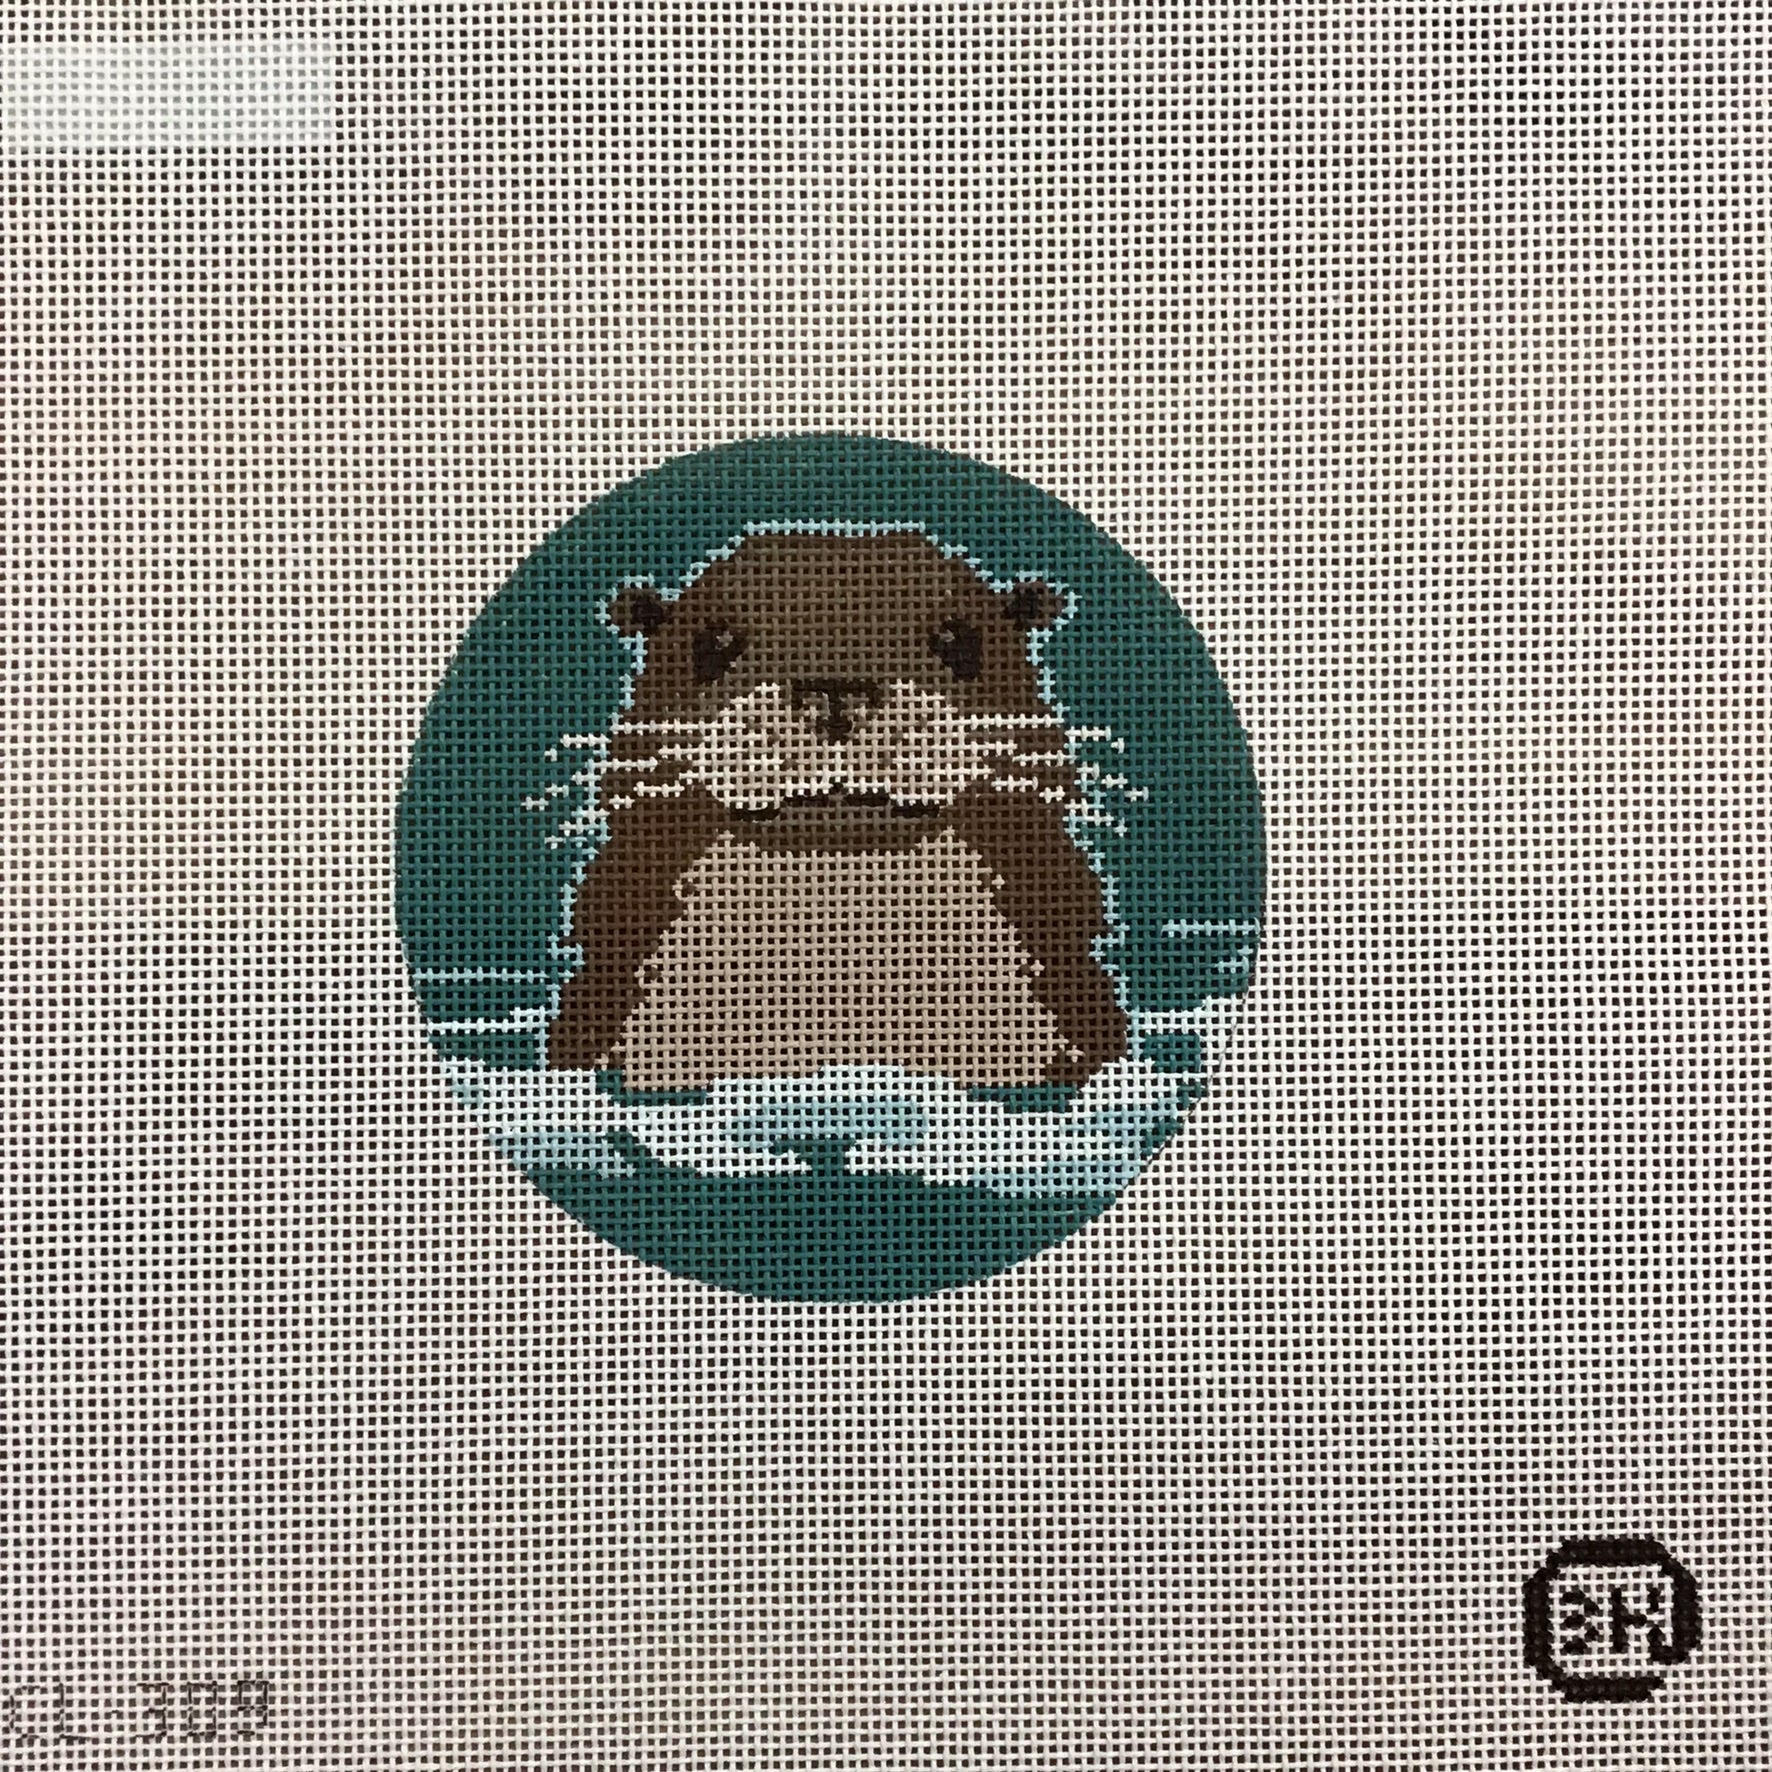 Otter Note Holder-Plastic Canvas Pattern-PDF Download